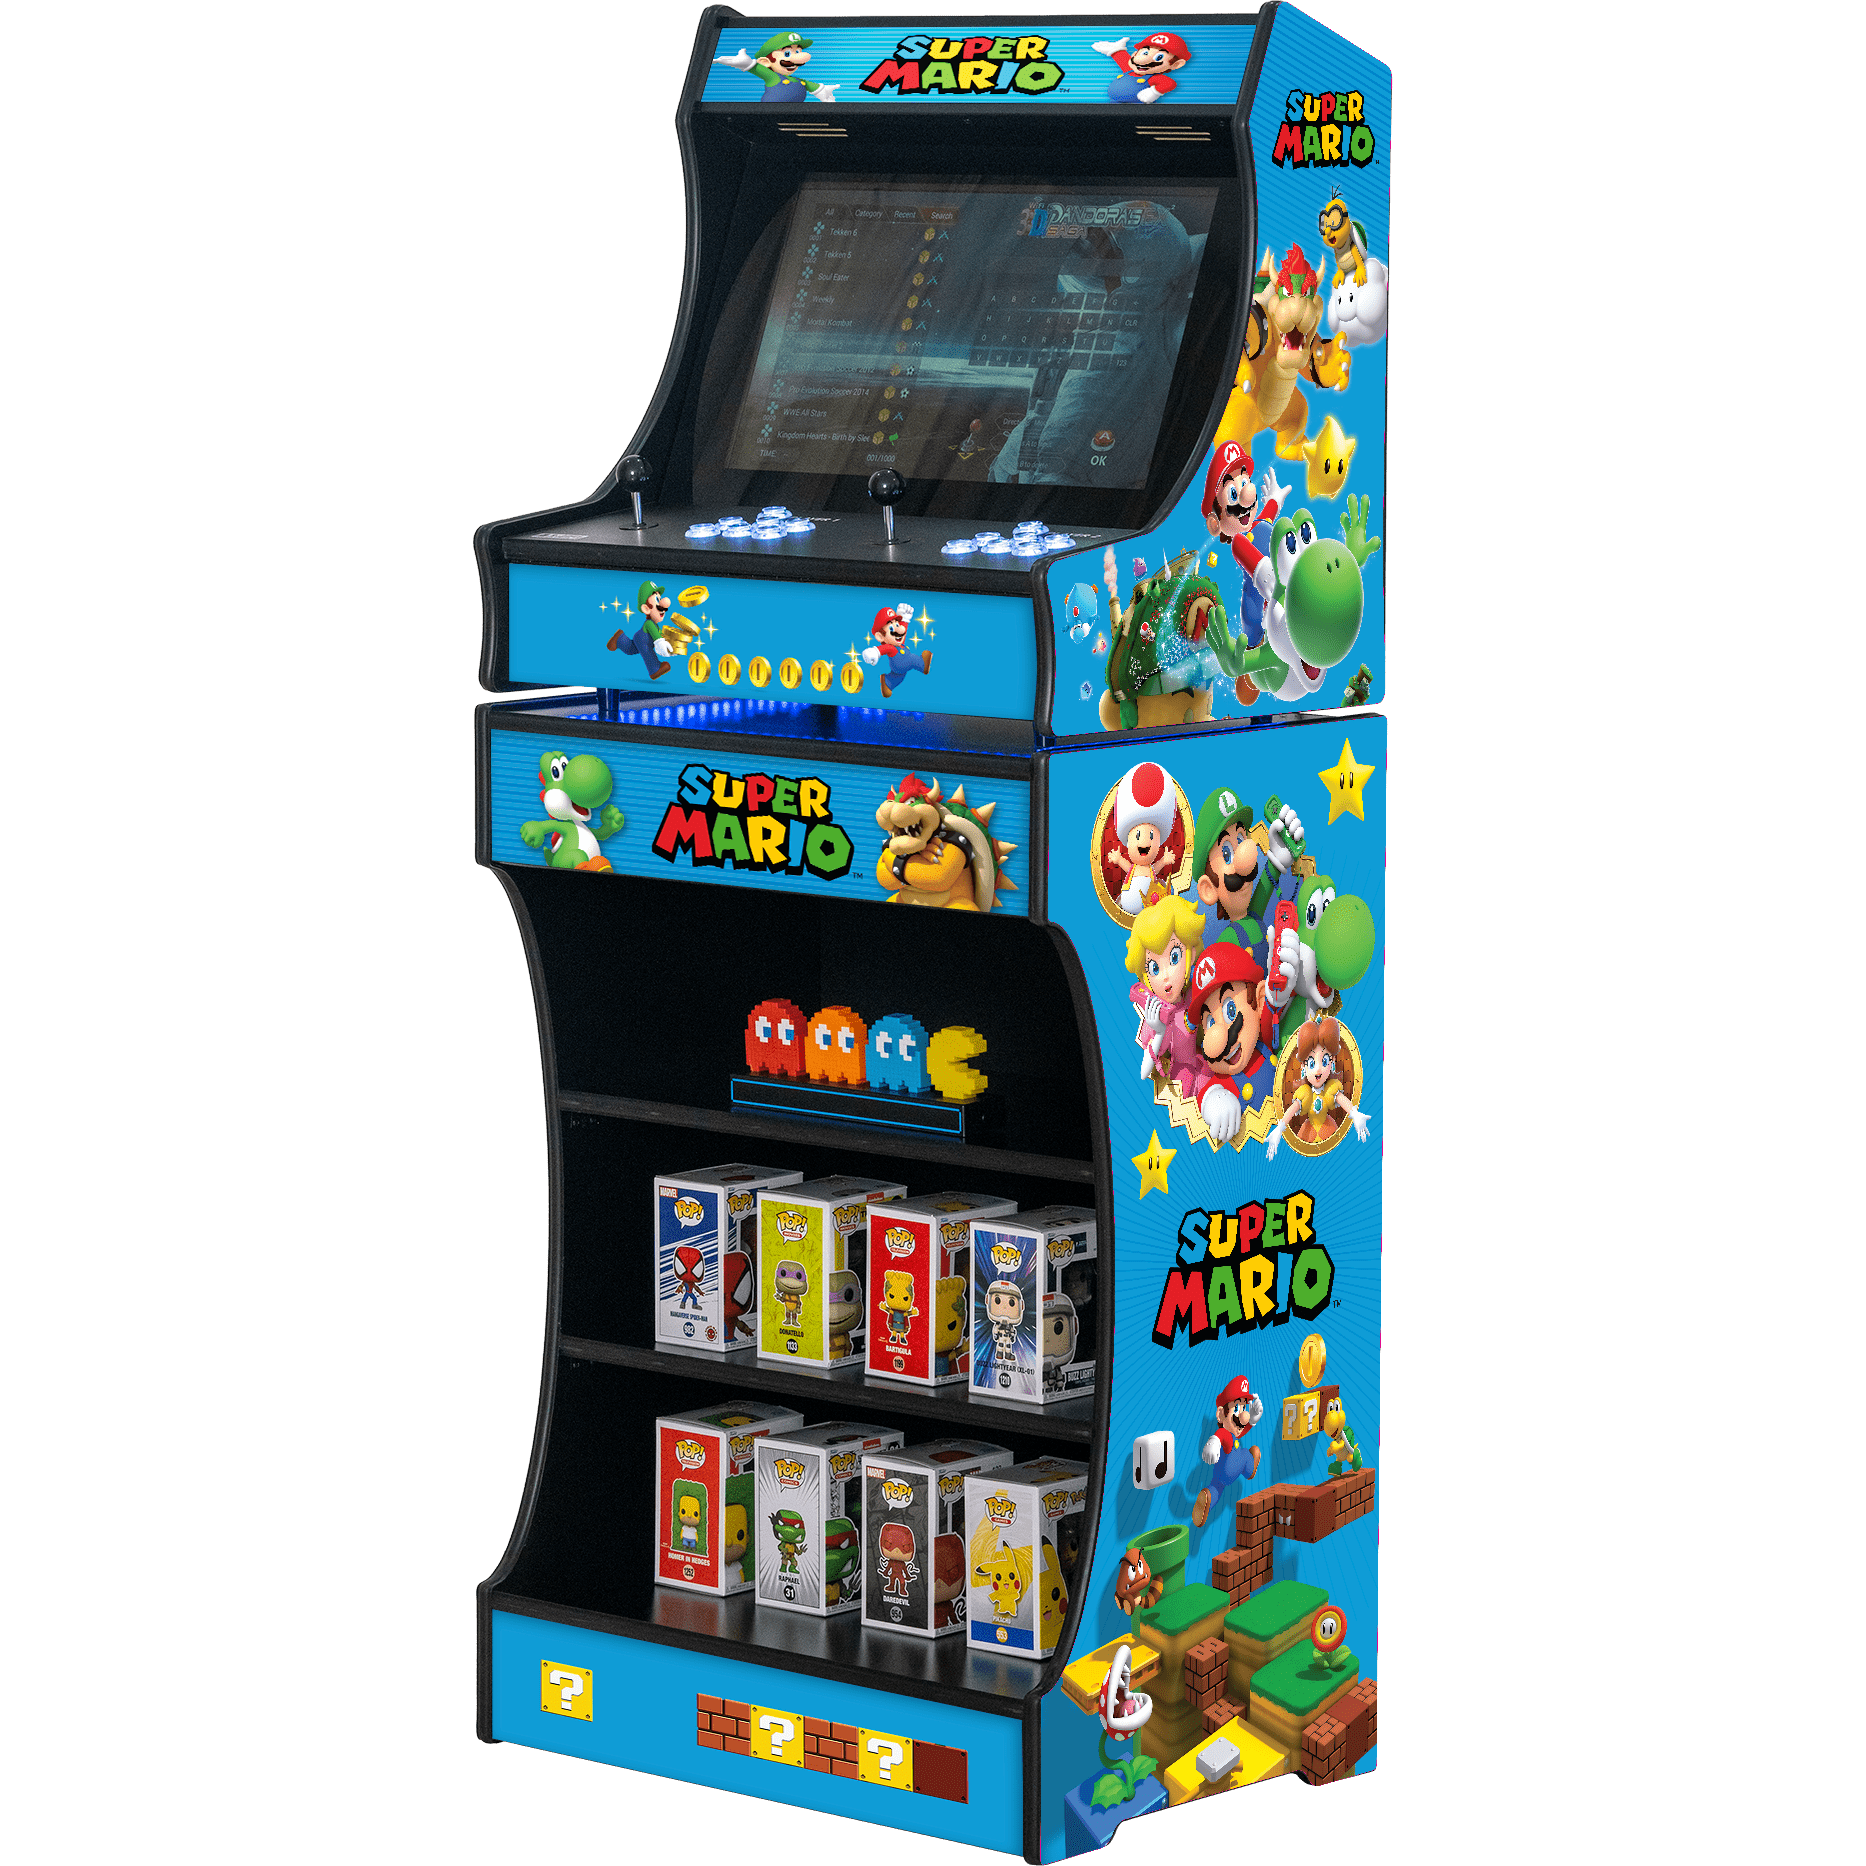 Upright 24 Inch Arcade Machine